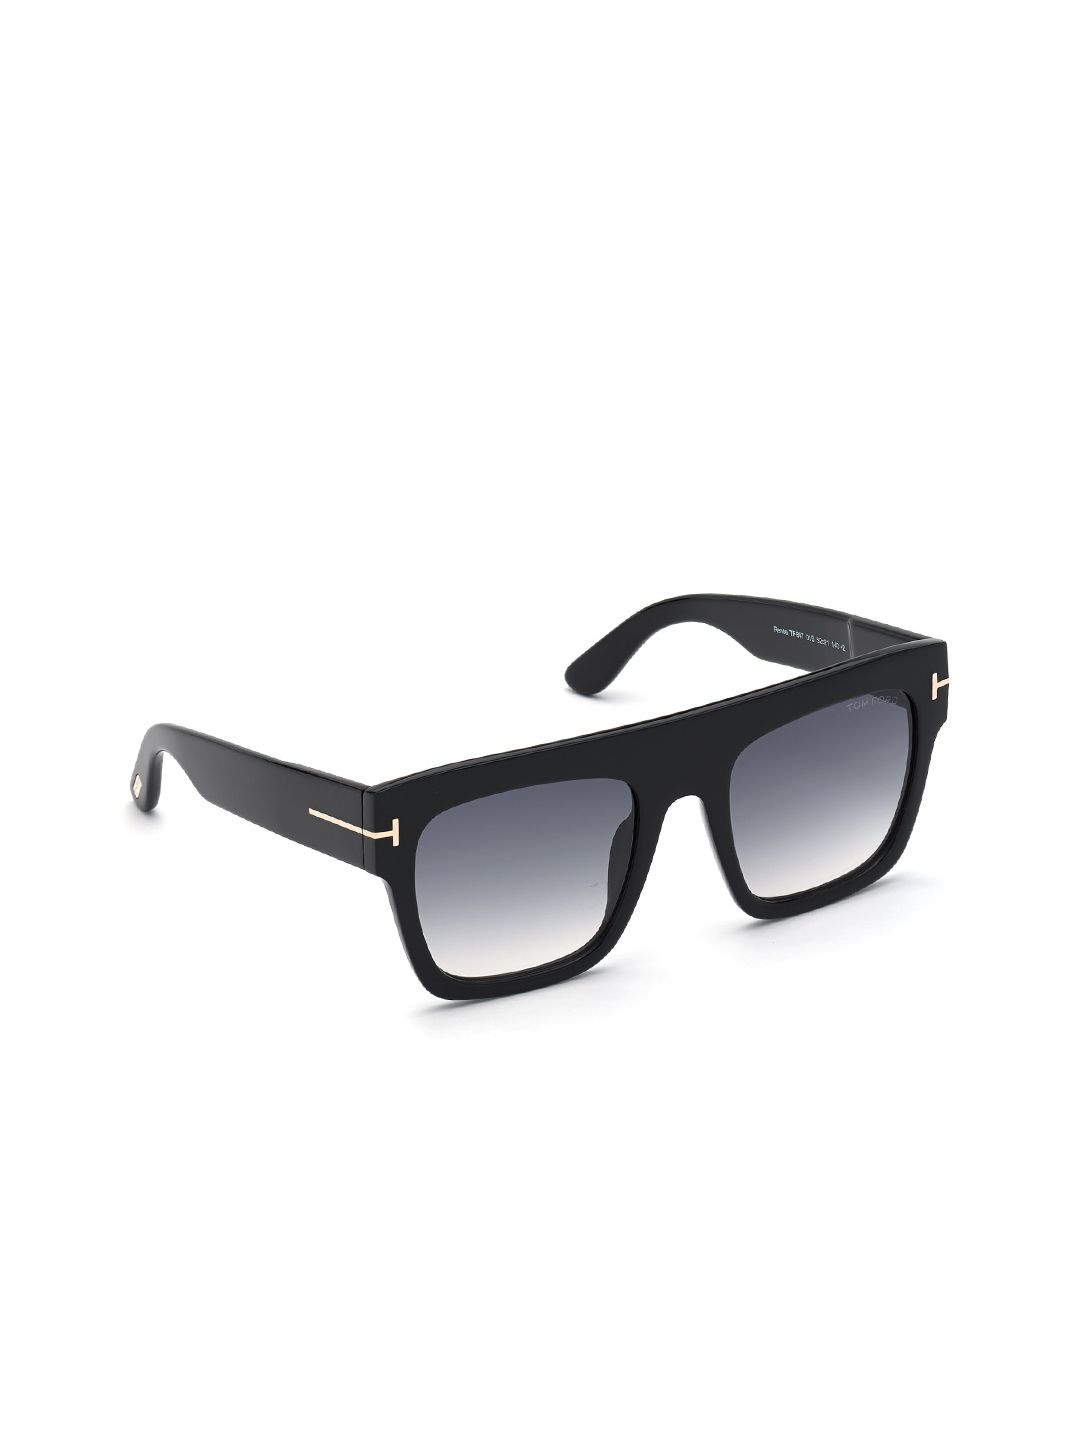 Tom Ford Women Grey Lens & Black Square Sunglasses FT0847 52 01B Price in India